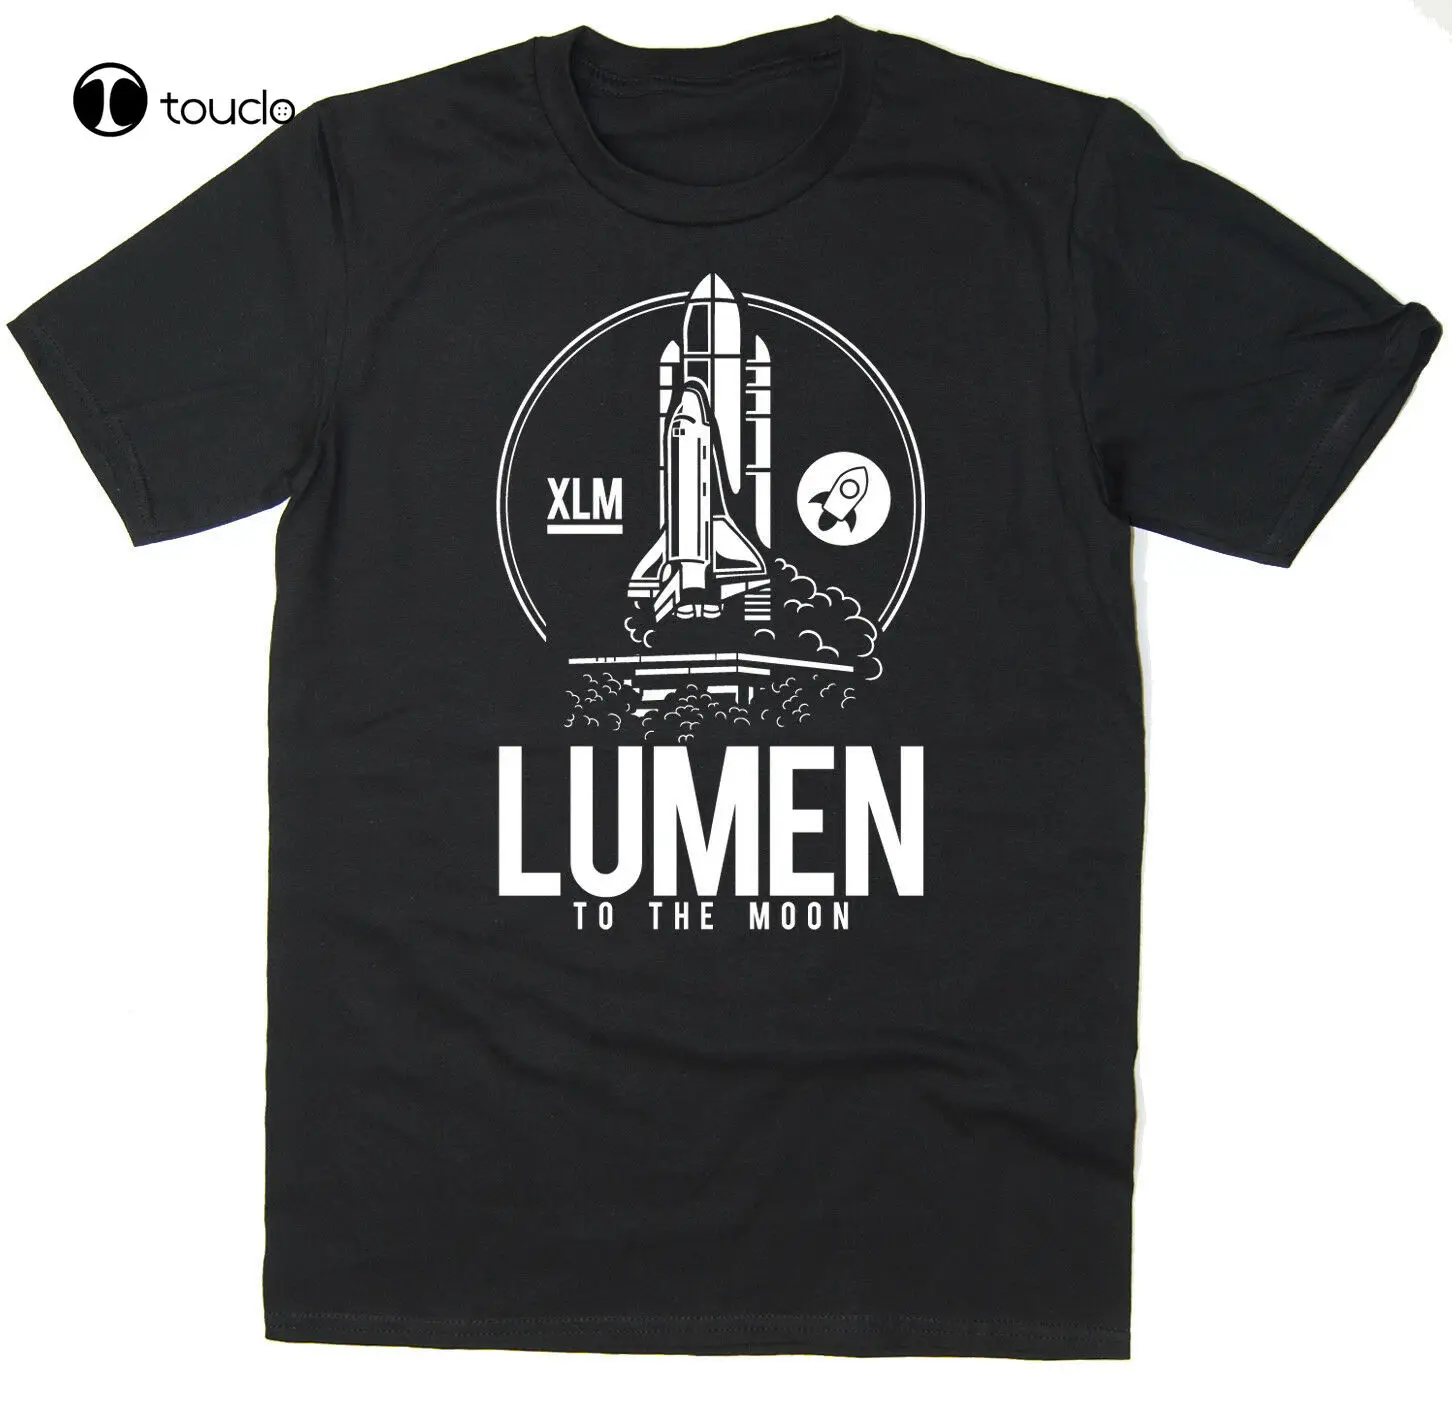 

Футболка Lumen To The Moon-Btc Xlm Stellar люмен-Биткоин крипто-6 цветов футболка на заказ aldult Подростковая унисекс